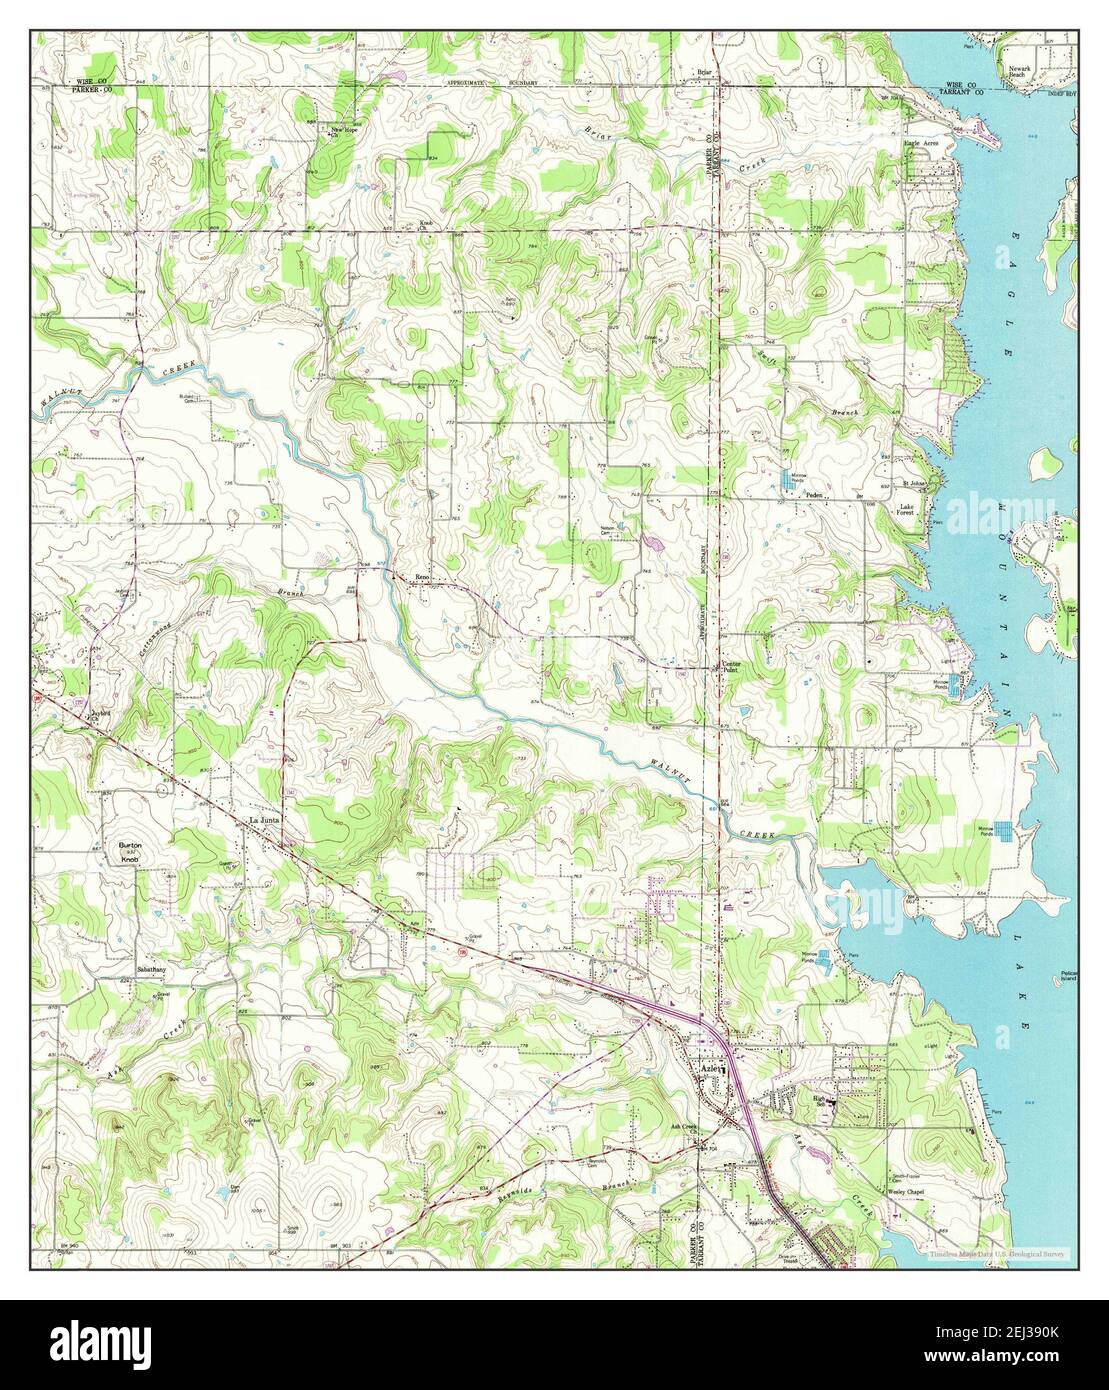 Azle, Texas, map 1955, 1:24000, United States of America by Timeless Maps, data U.S. Geological Survey Stock Photo